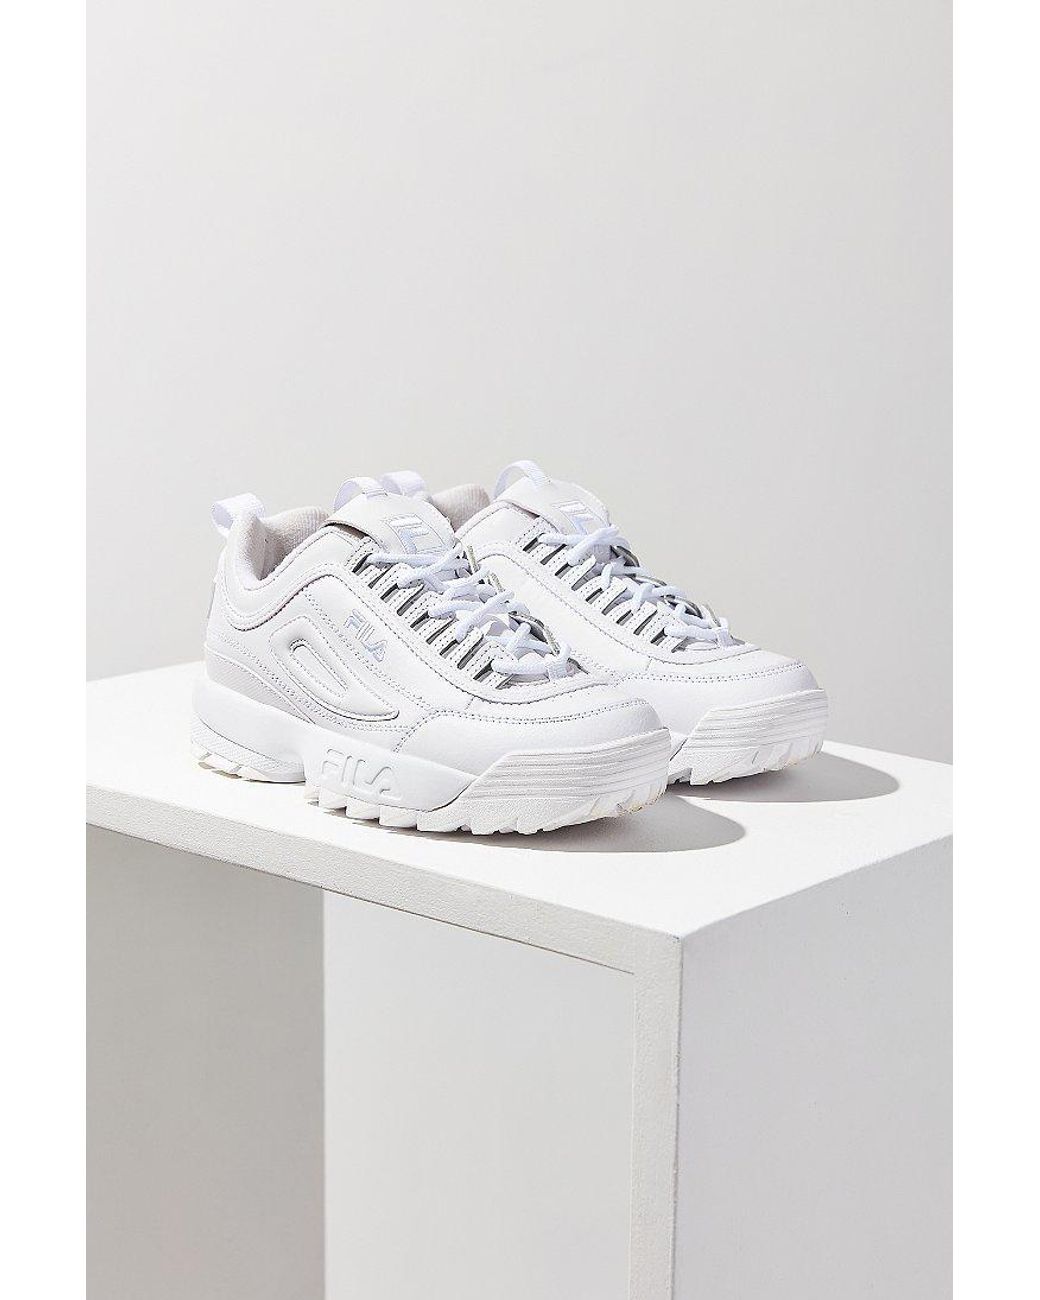 Fila Fila Disruptor 2 Premium Mono Sneaker in Ivory (White) | Lyst